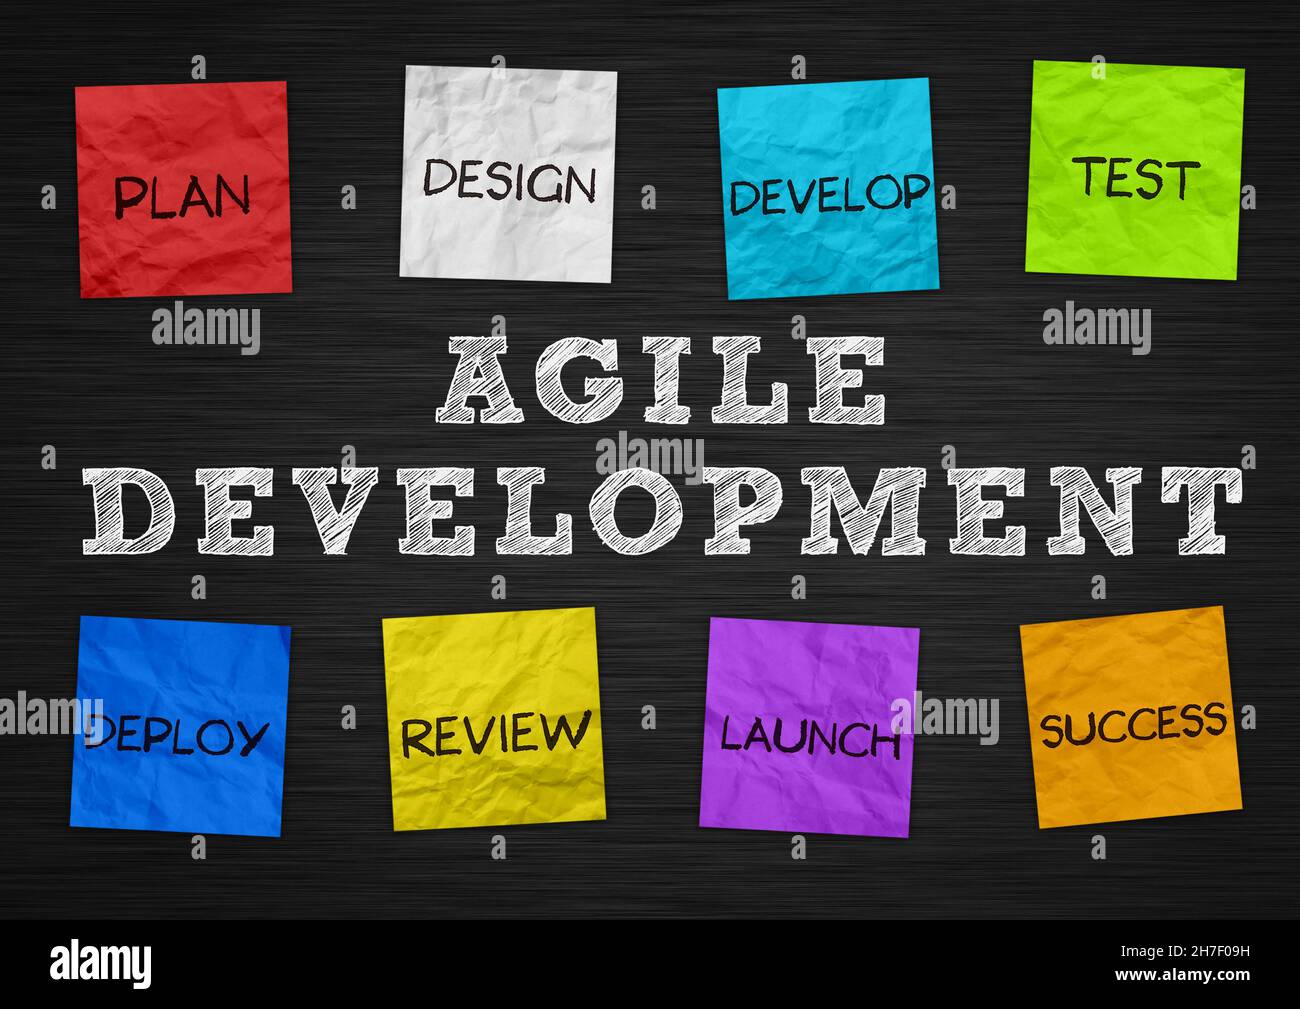 Agile Development - Process overview Stock Photo